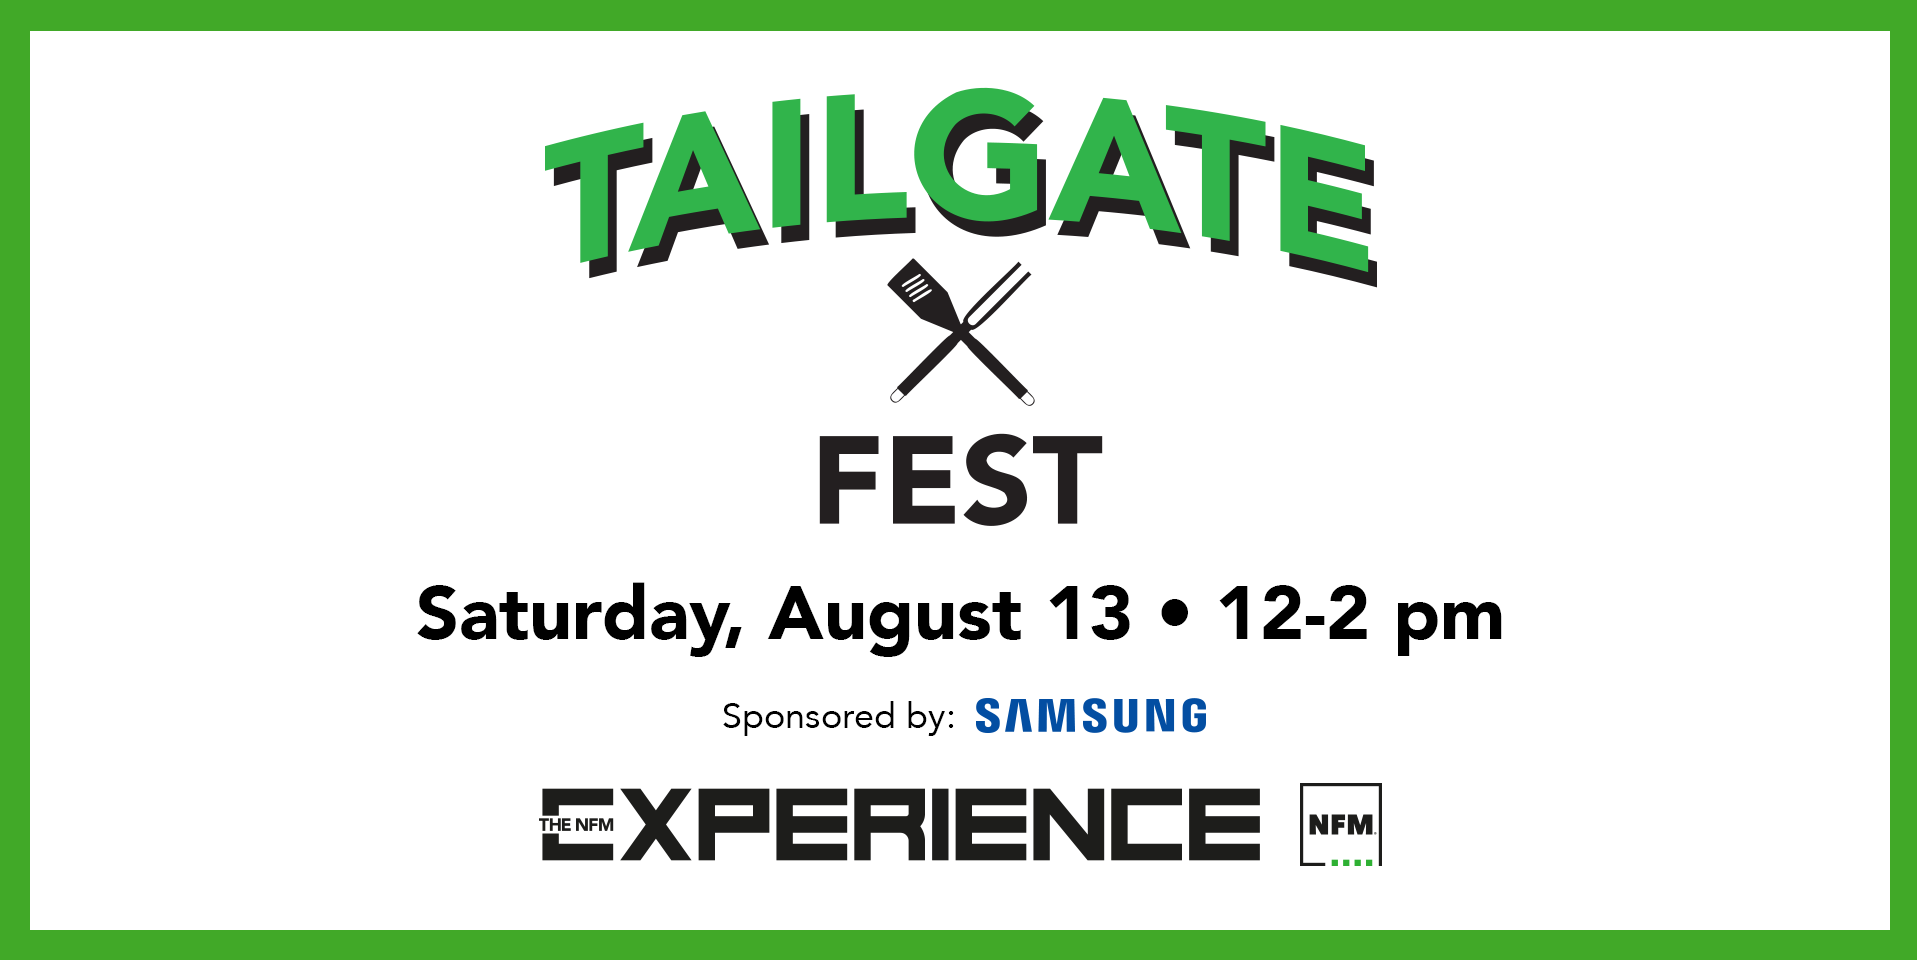 Tailgate Fest promotional image